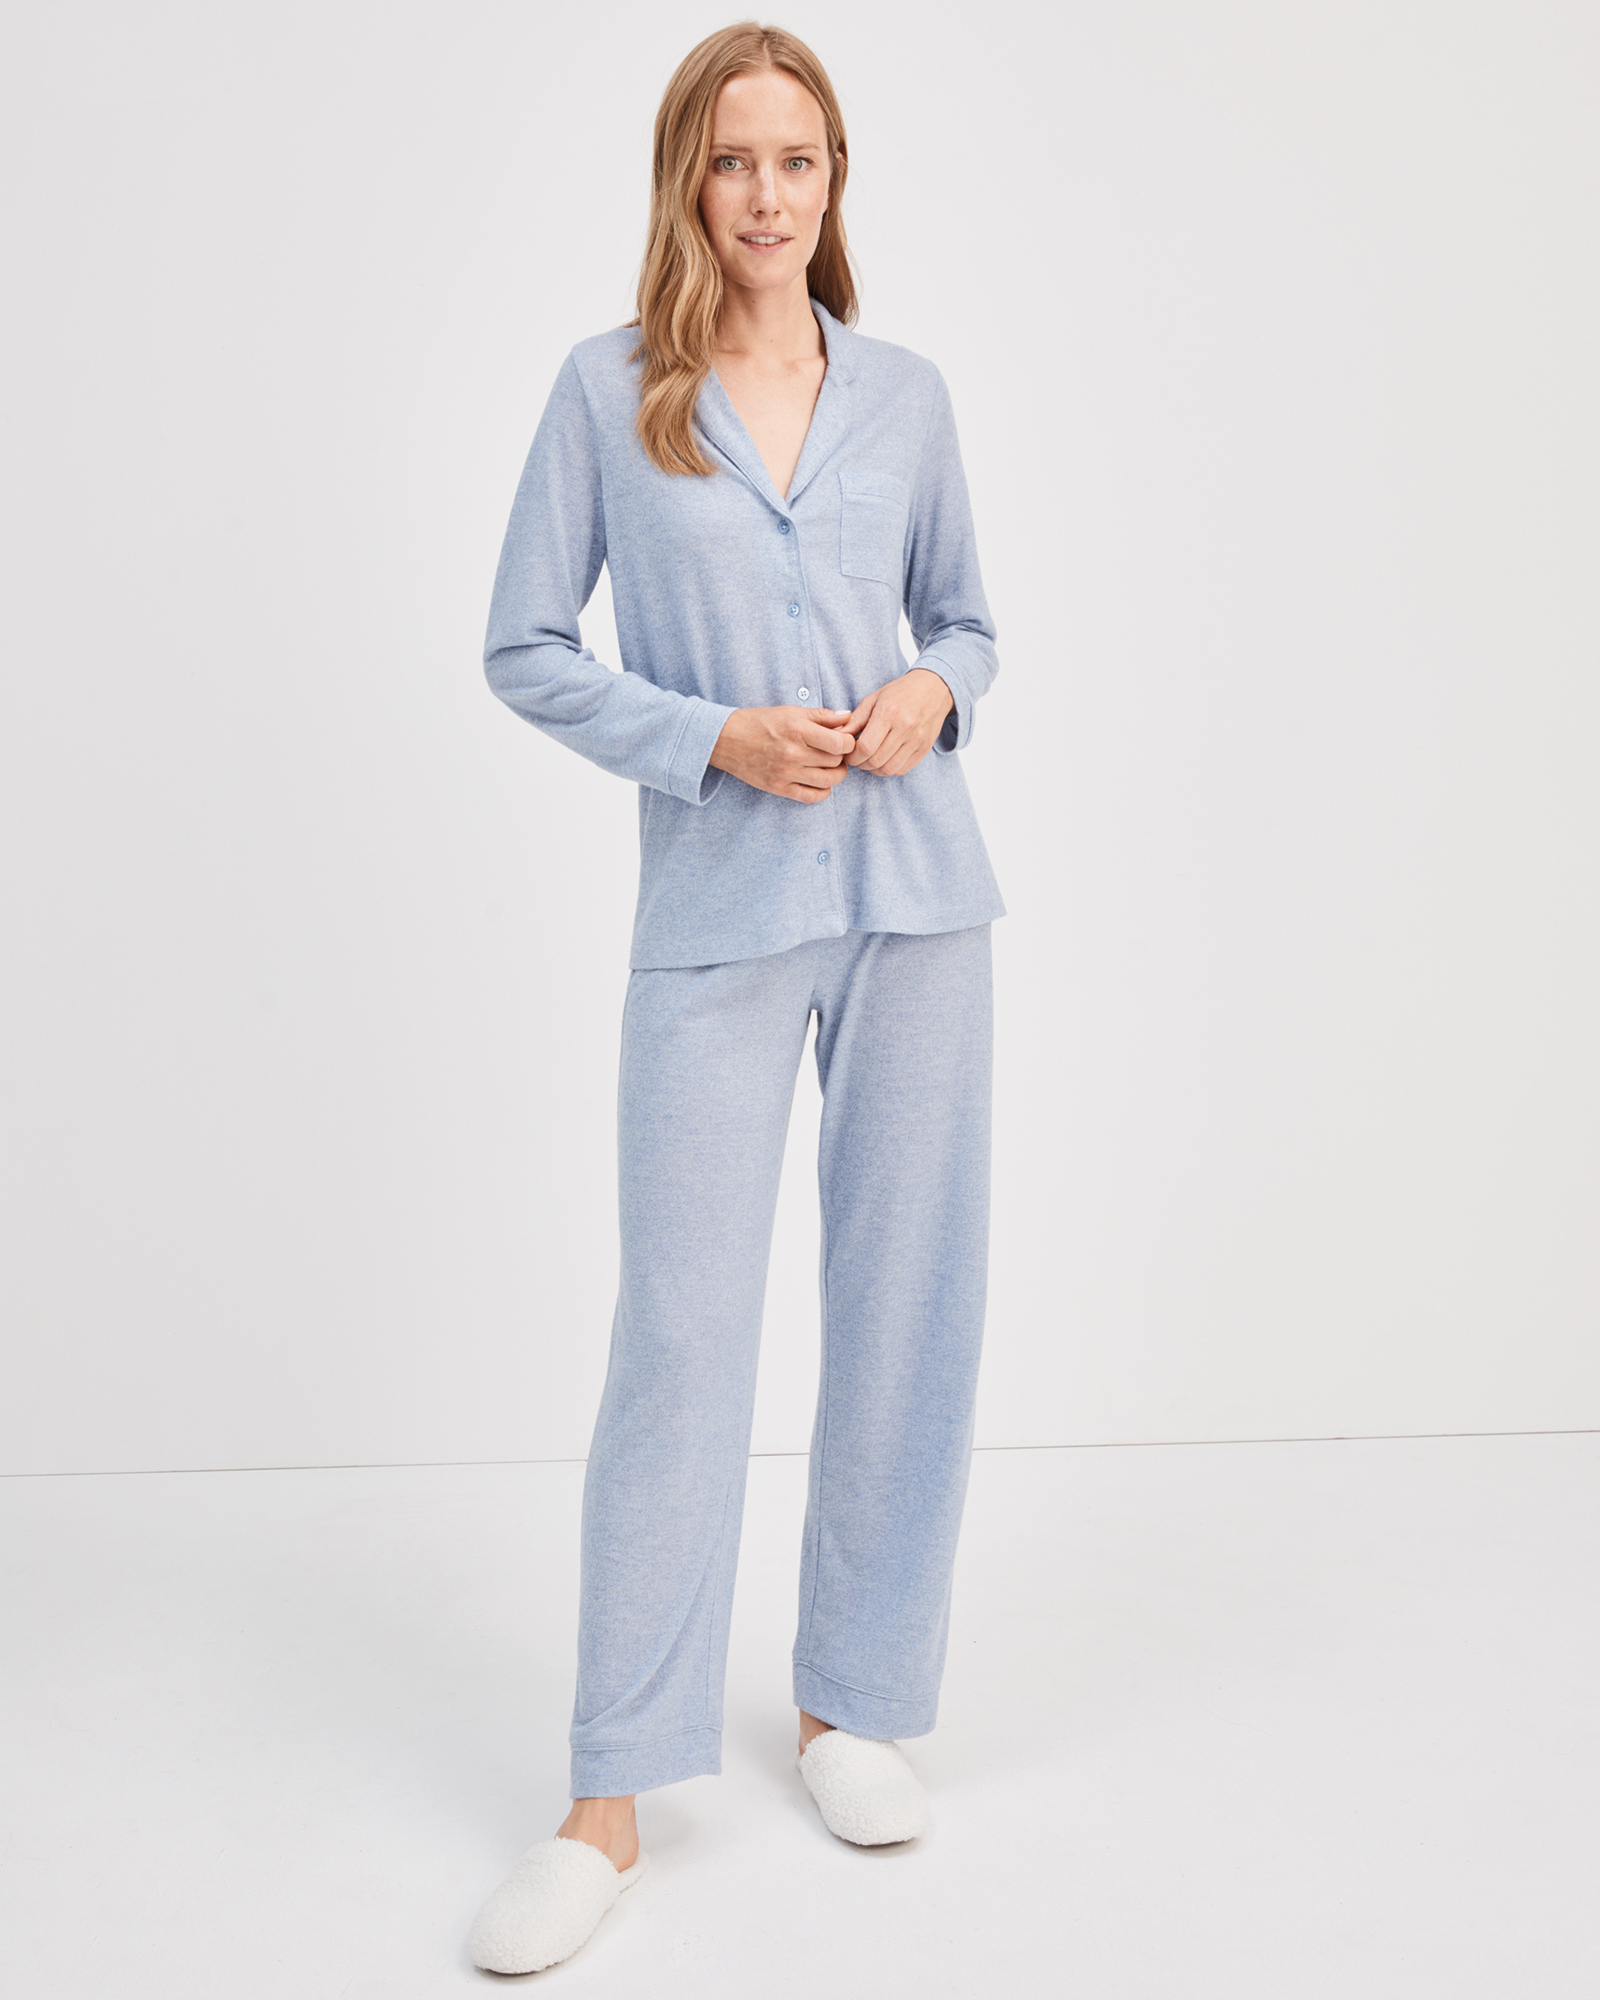 Talbots Marled Knit Pajama Shirt - Chambray Heather - Xxl  In Blue